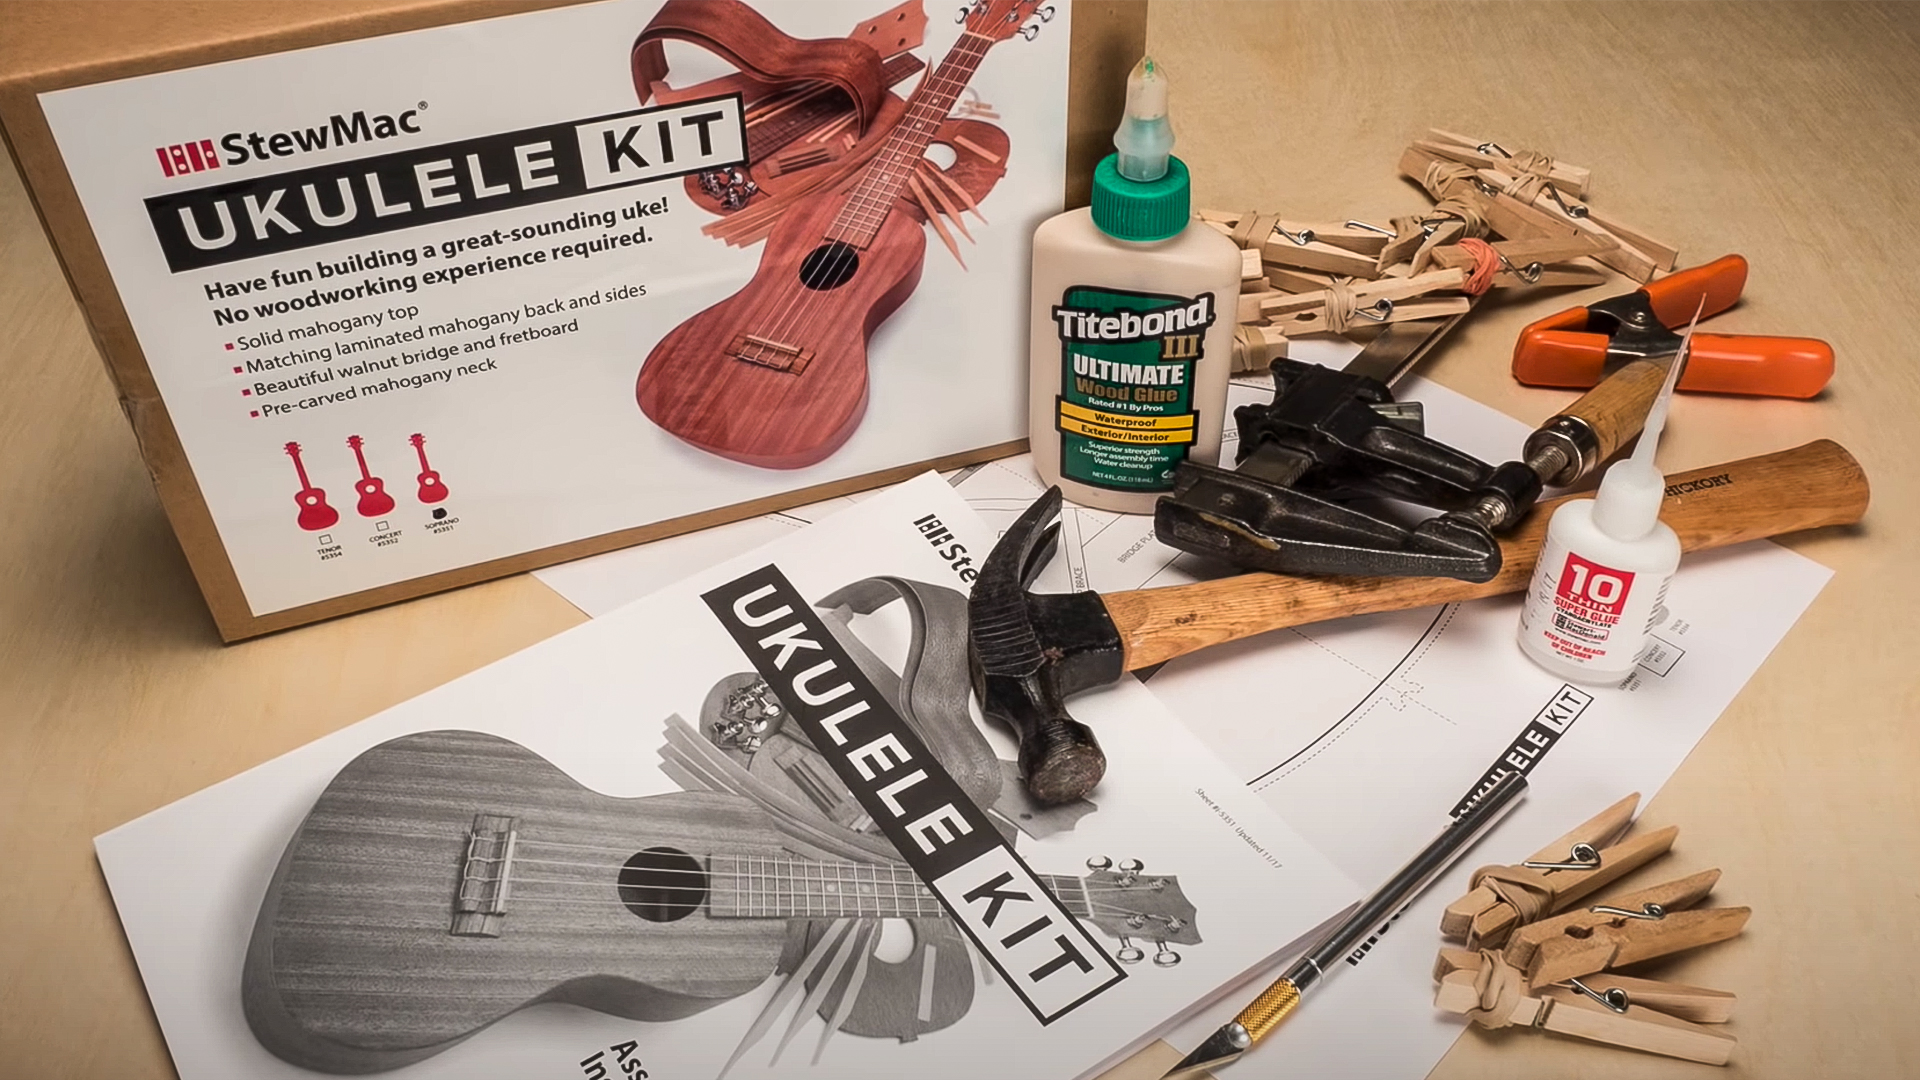 StewMac Ukulele Kit unboxed with tools on workbench